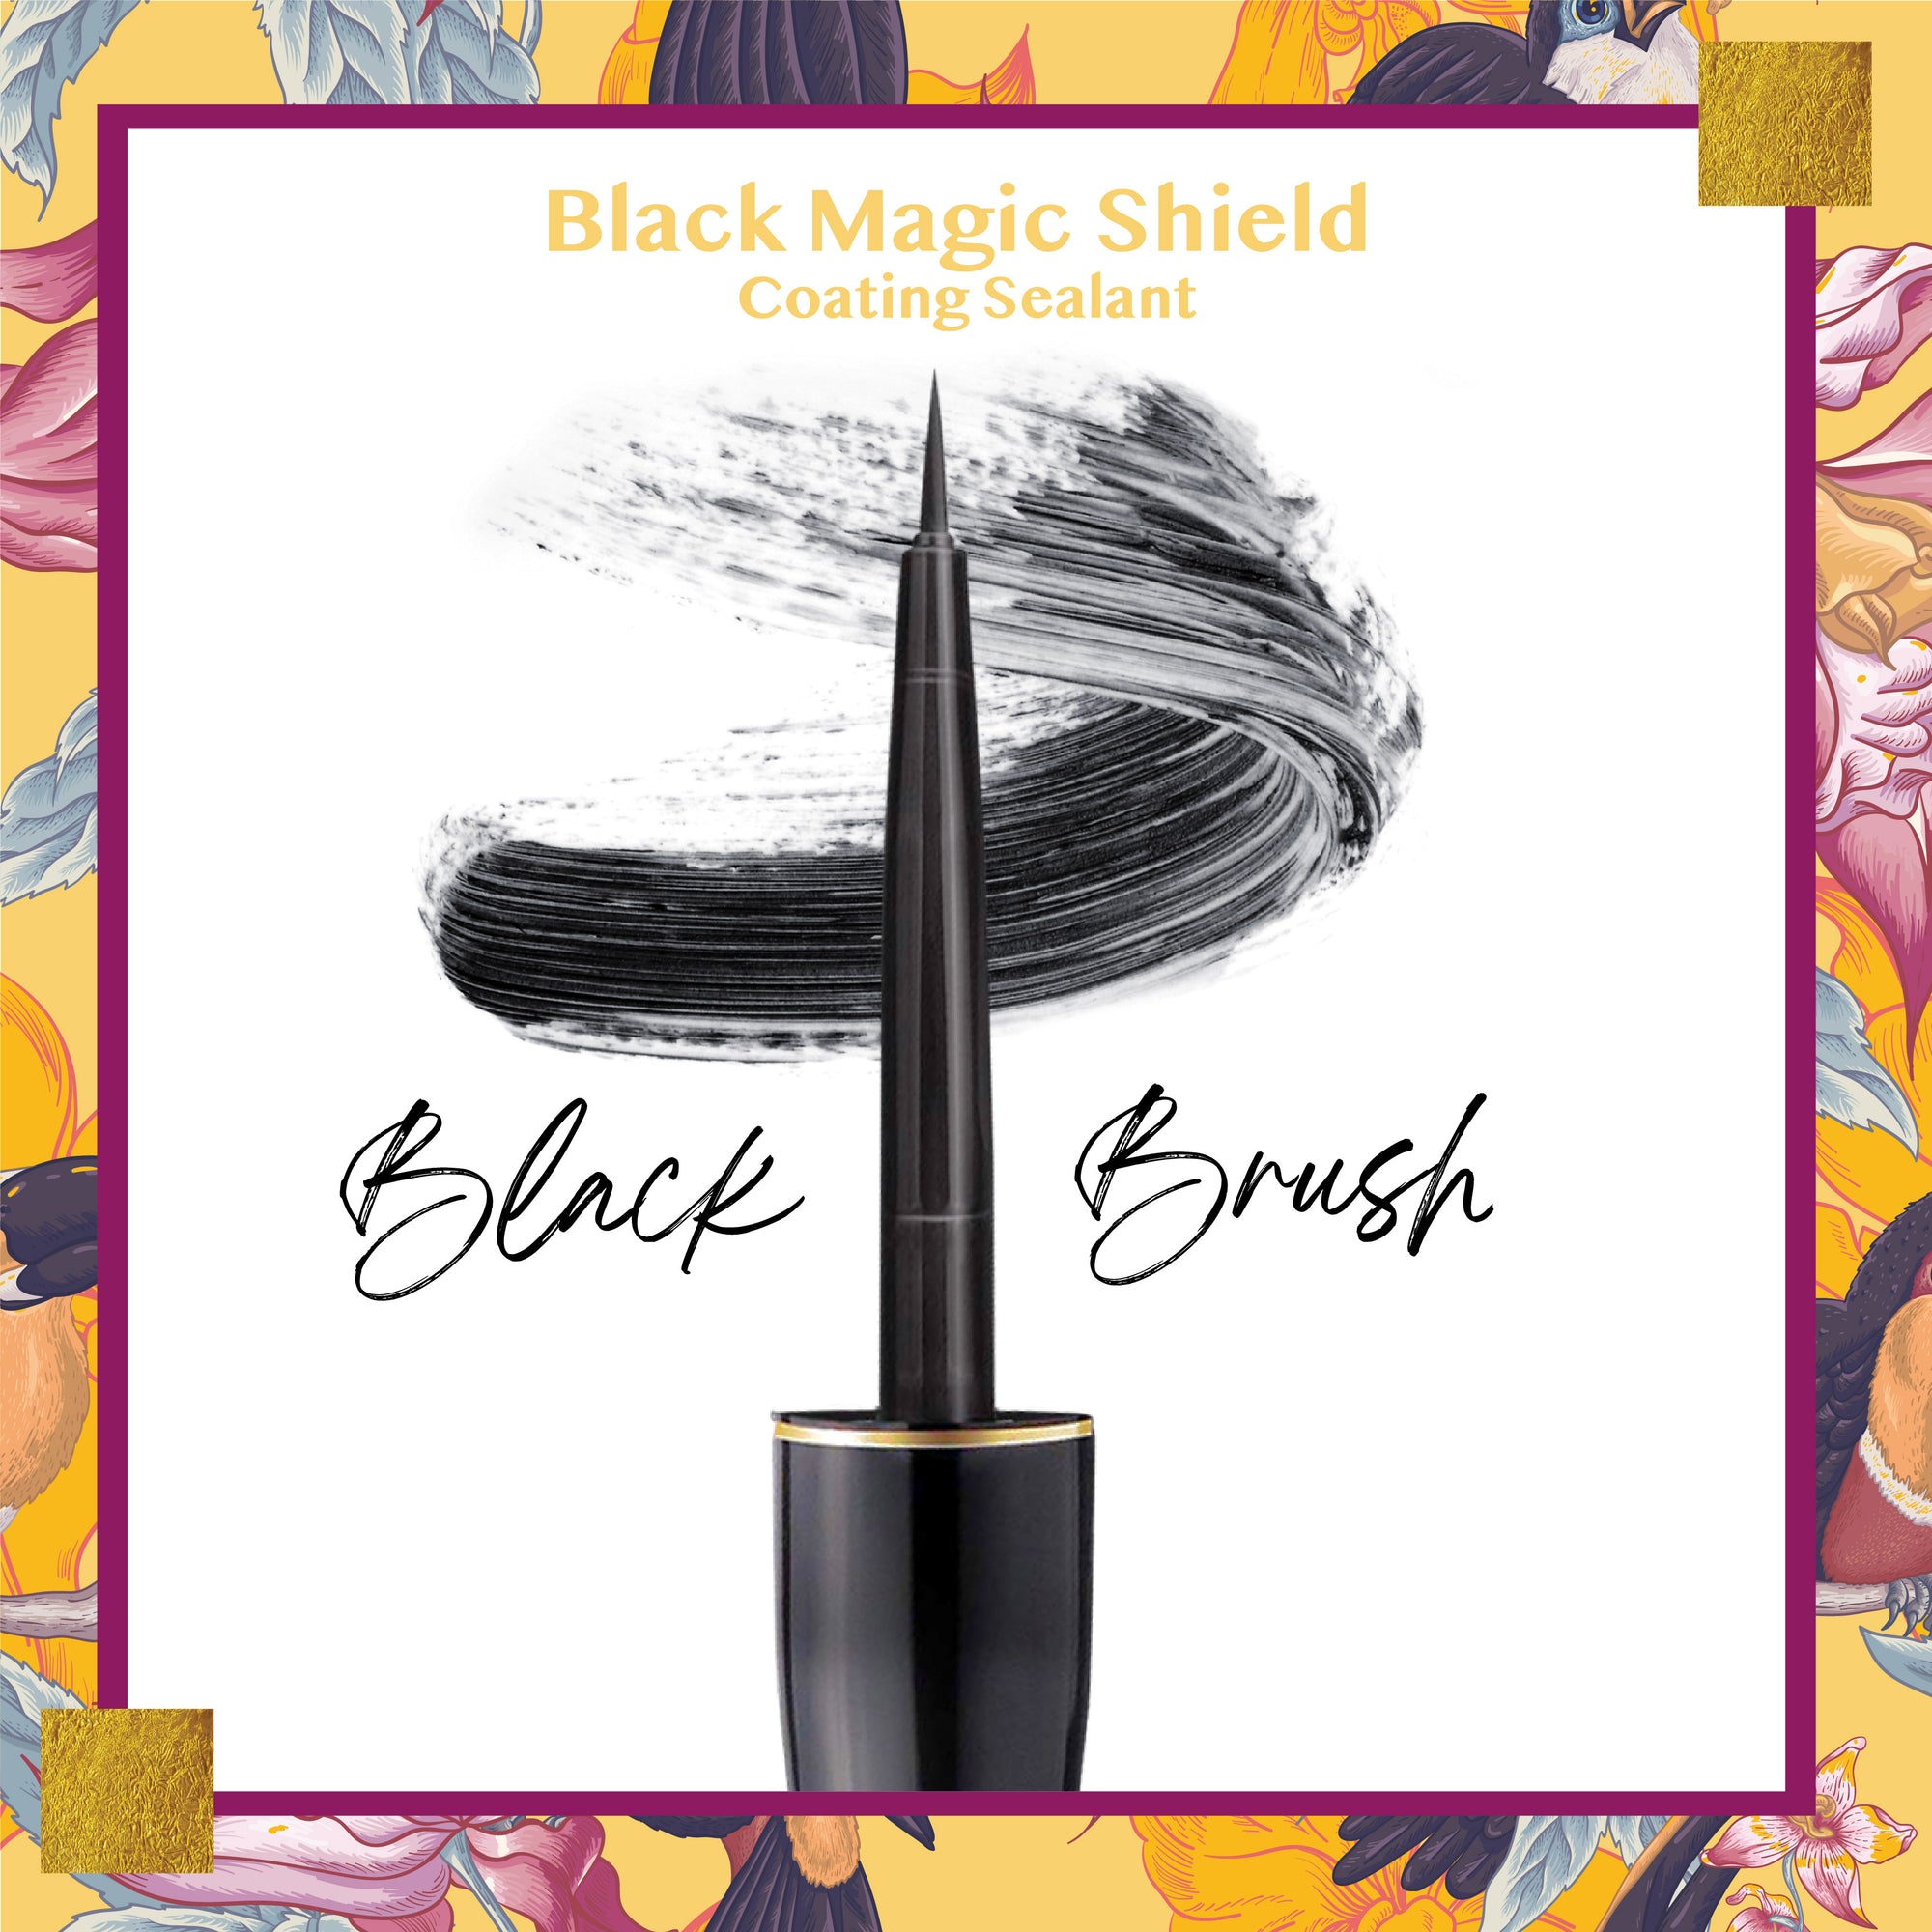 Black Magic Shield - Black Coating Sealant ( Brush Type )